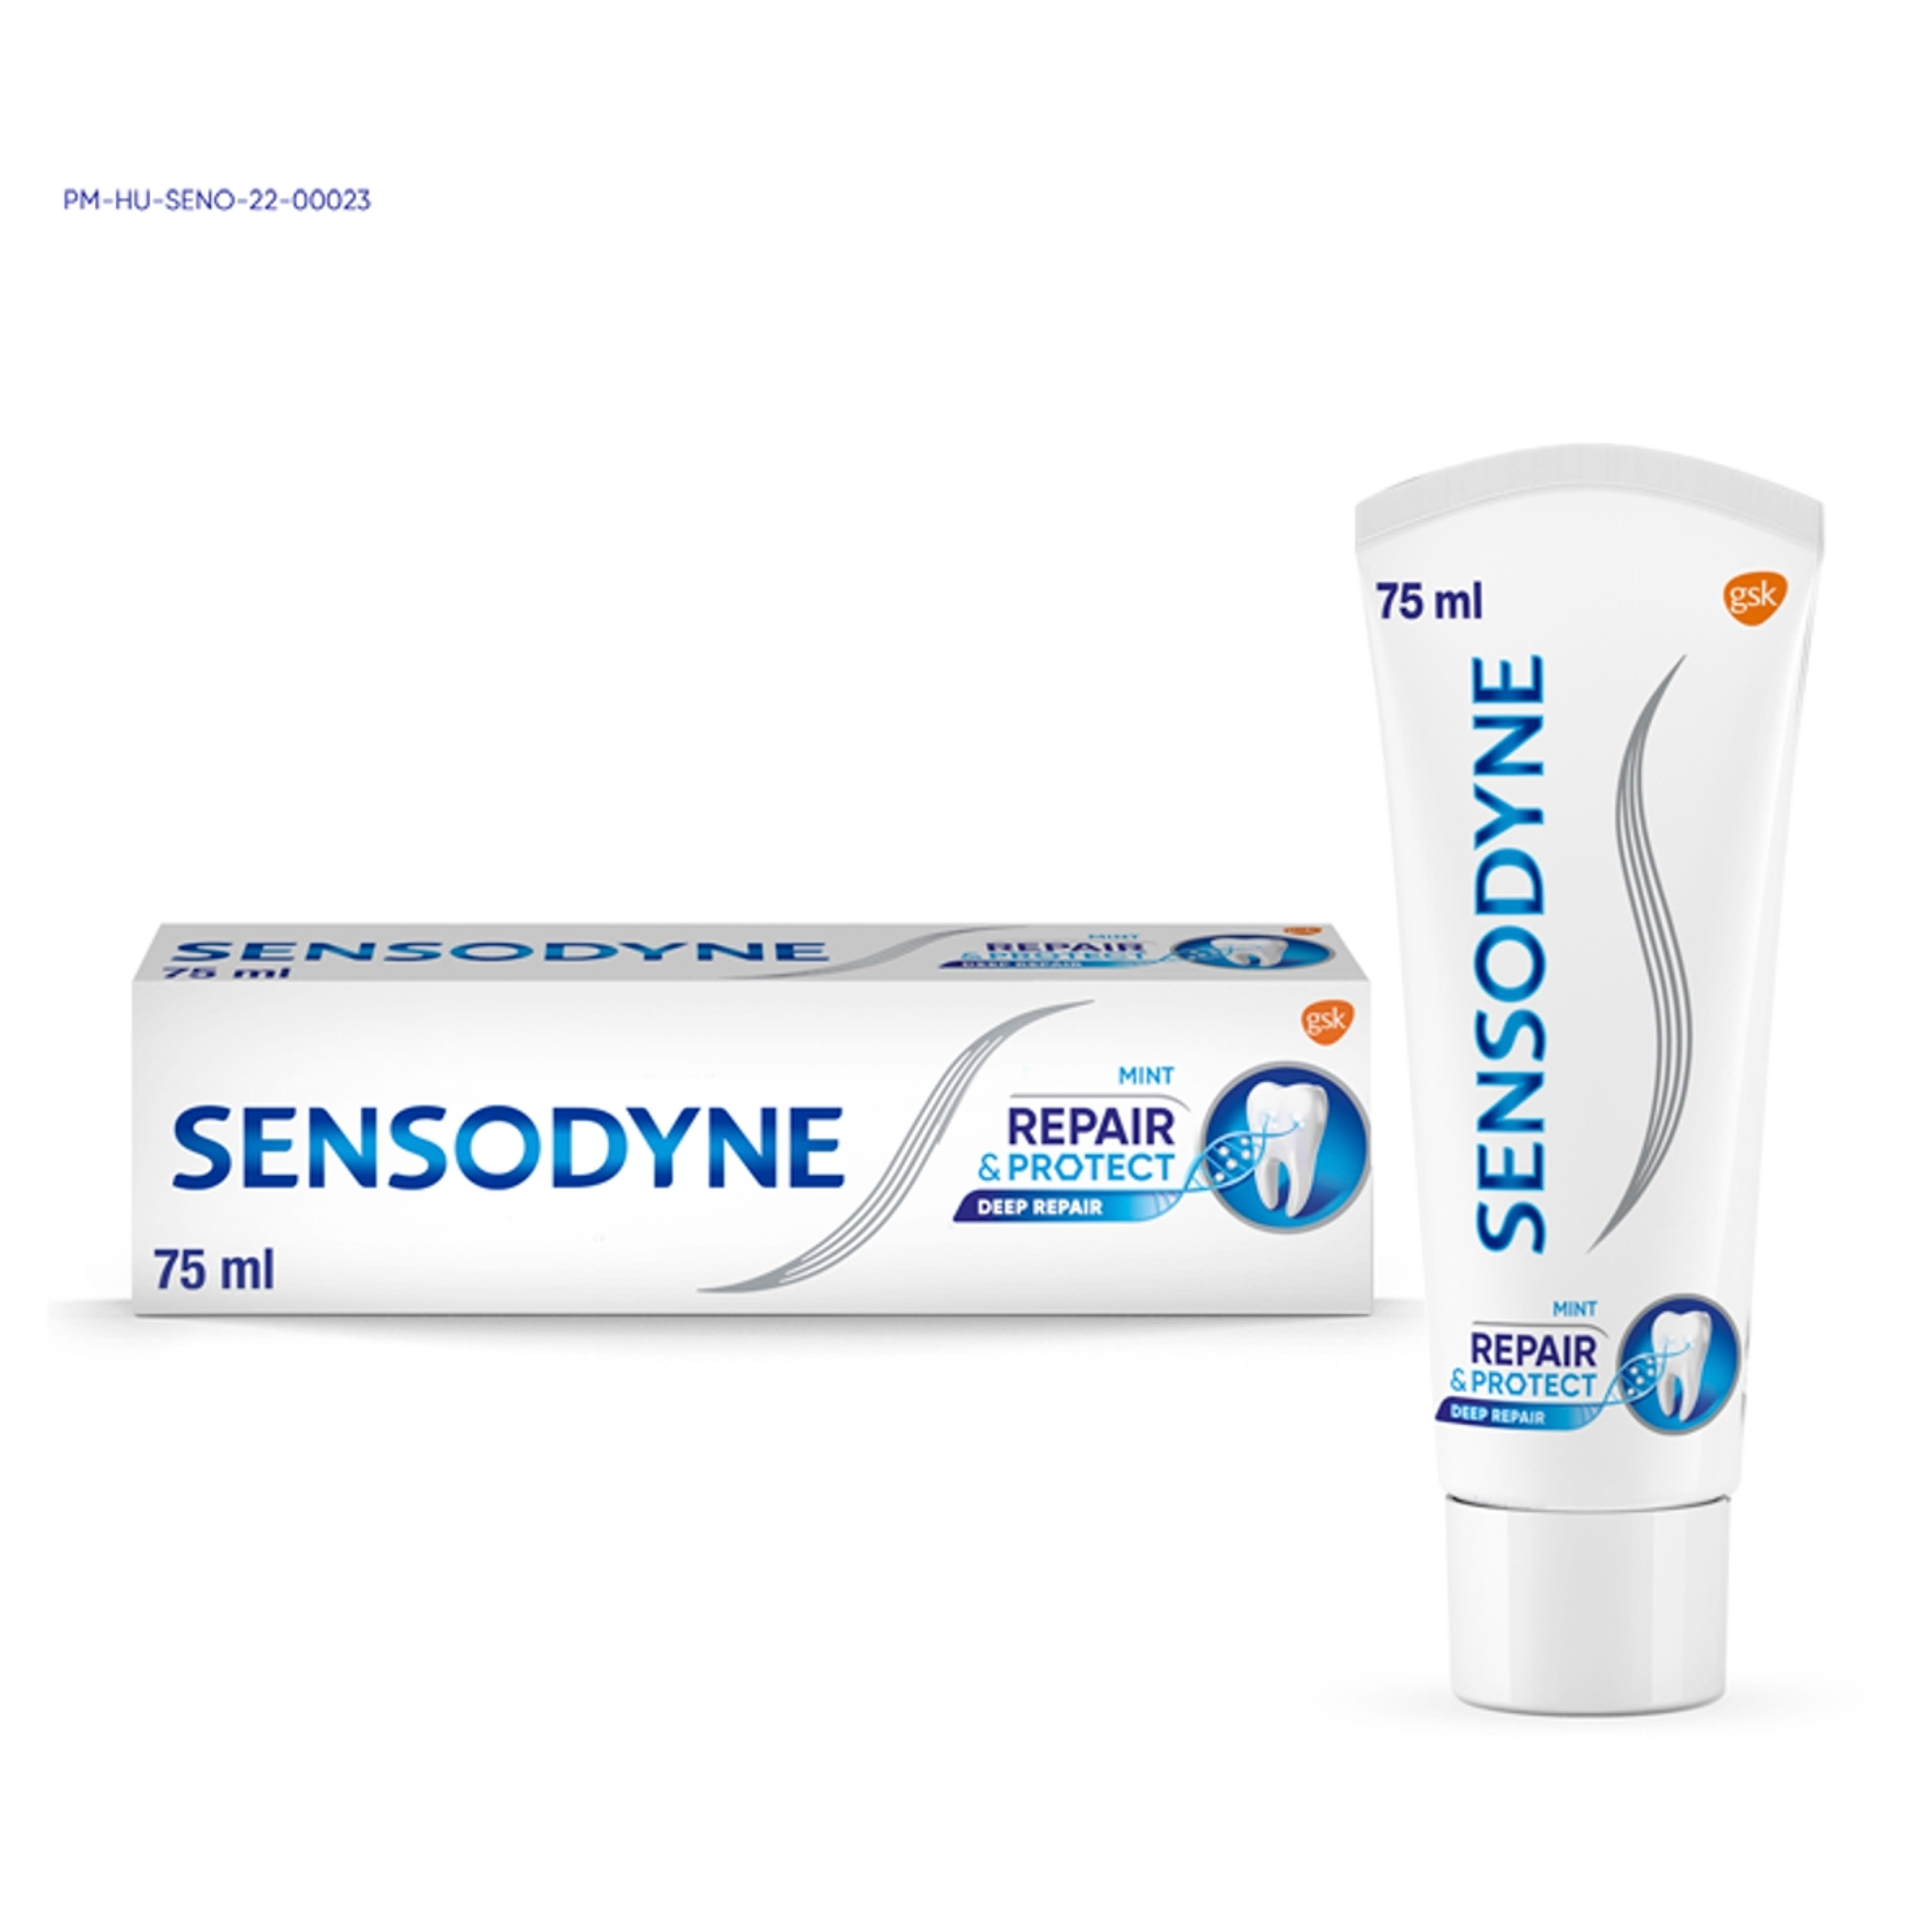 Sensodyne Repair & Protect fogkrém - 75 ml-2